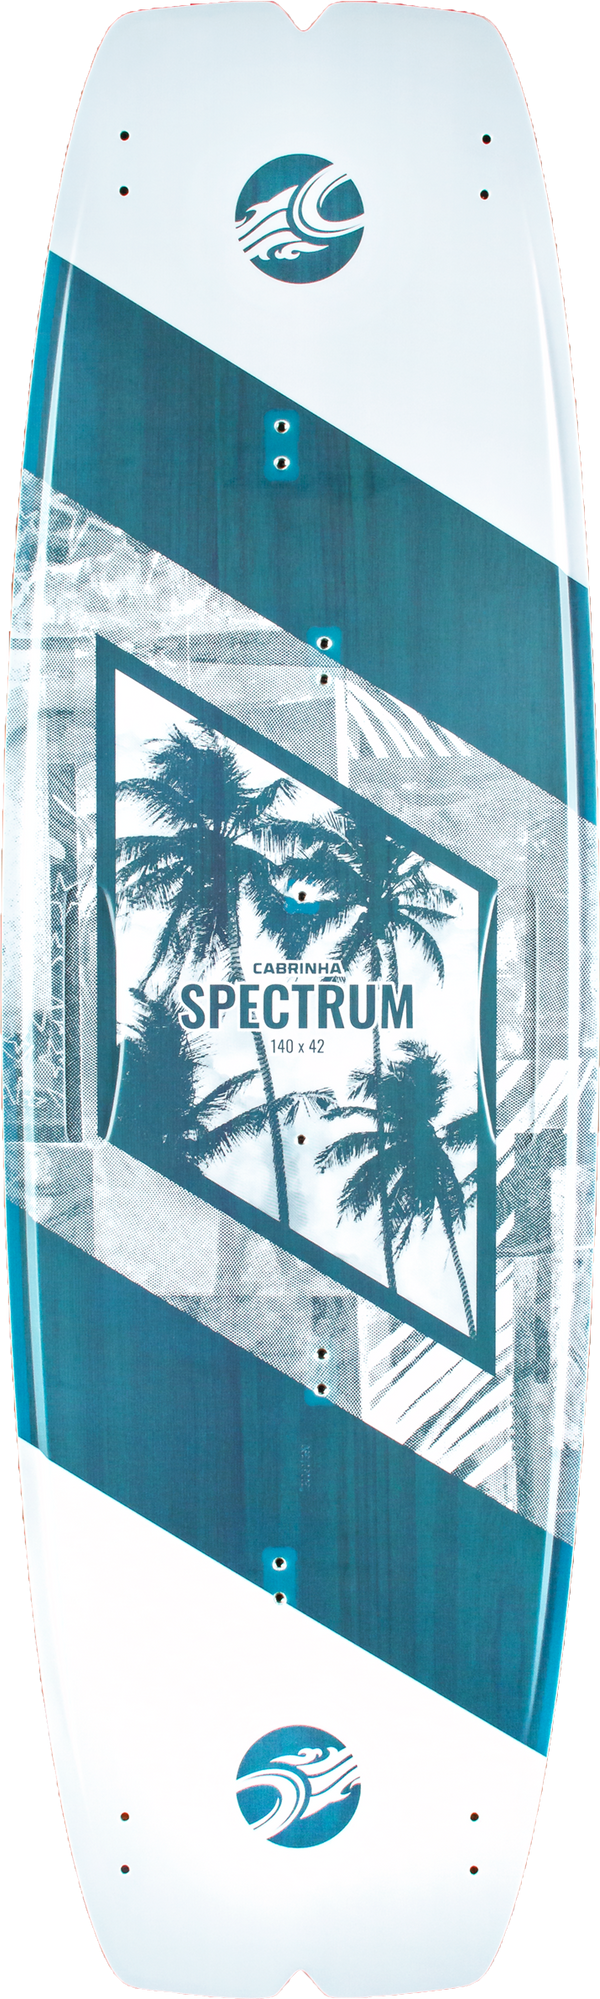 2022 Cabrinha Spectrum - Surf & Kite